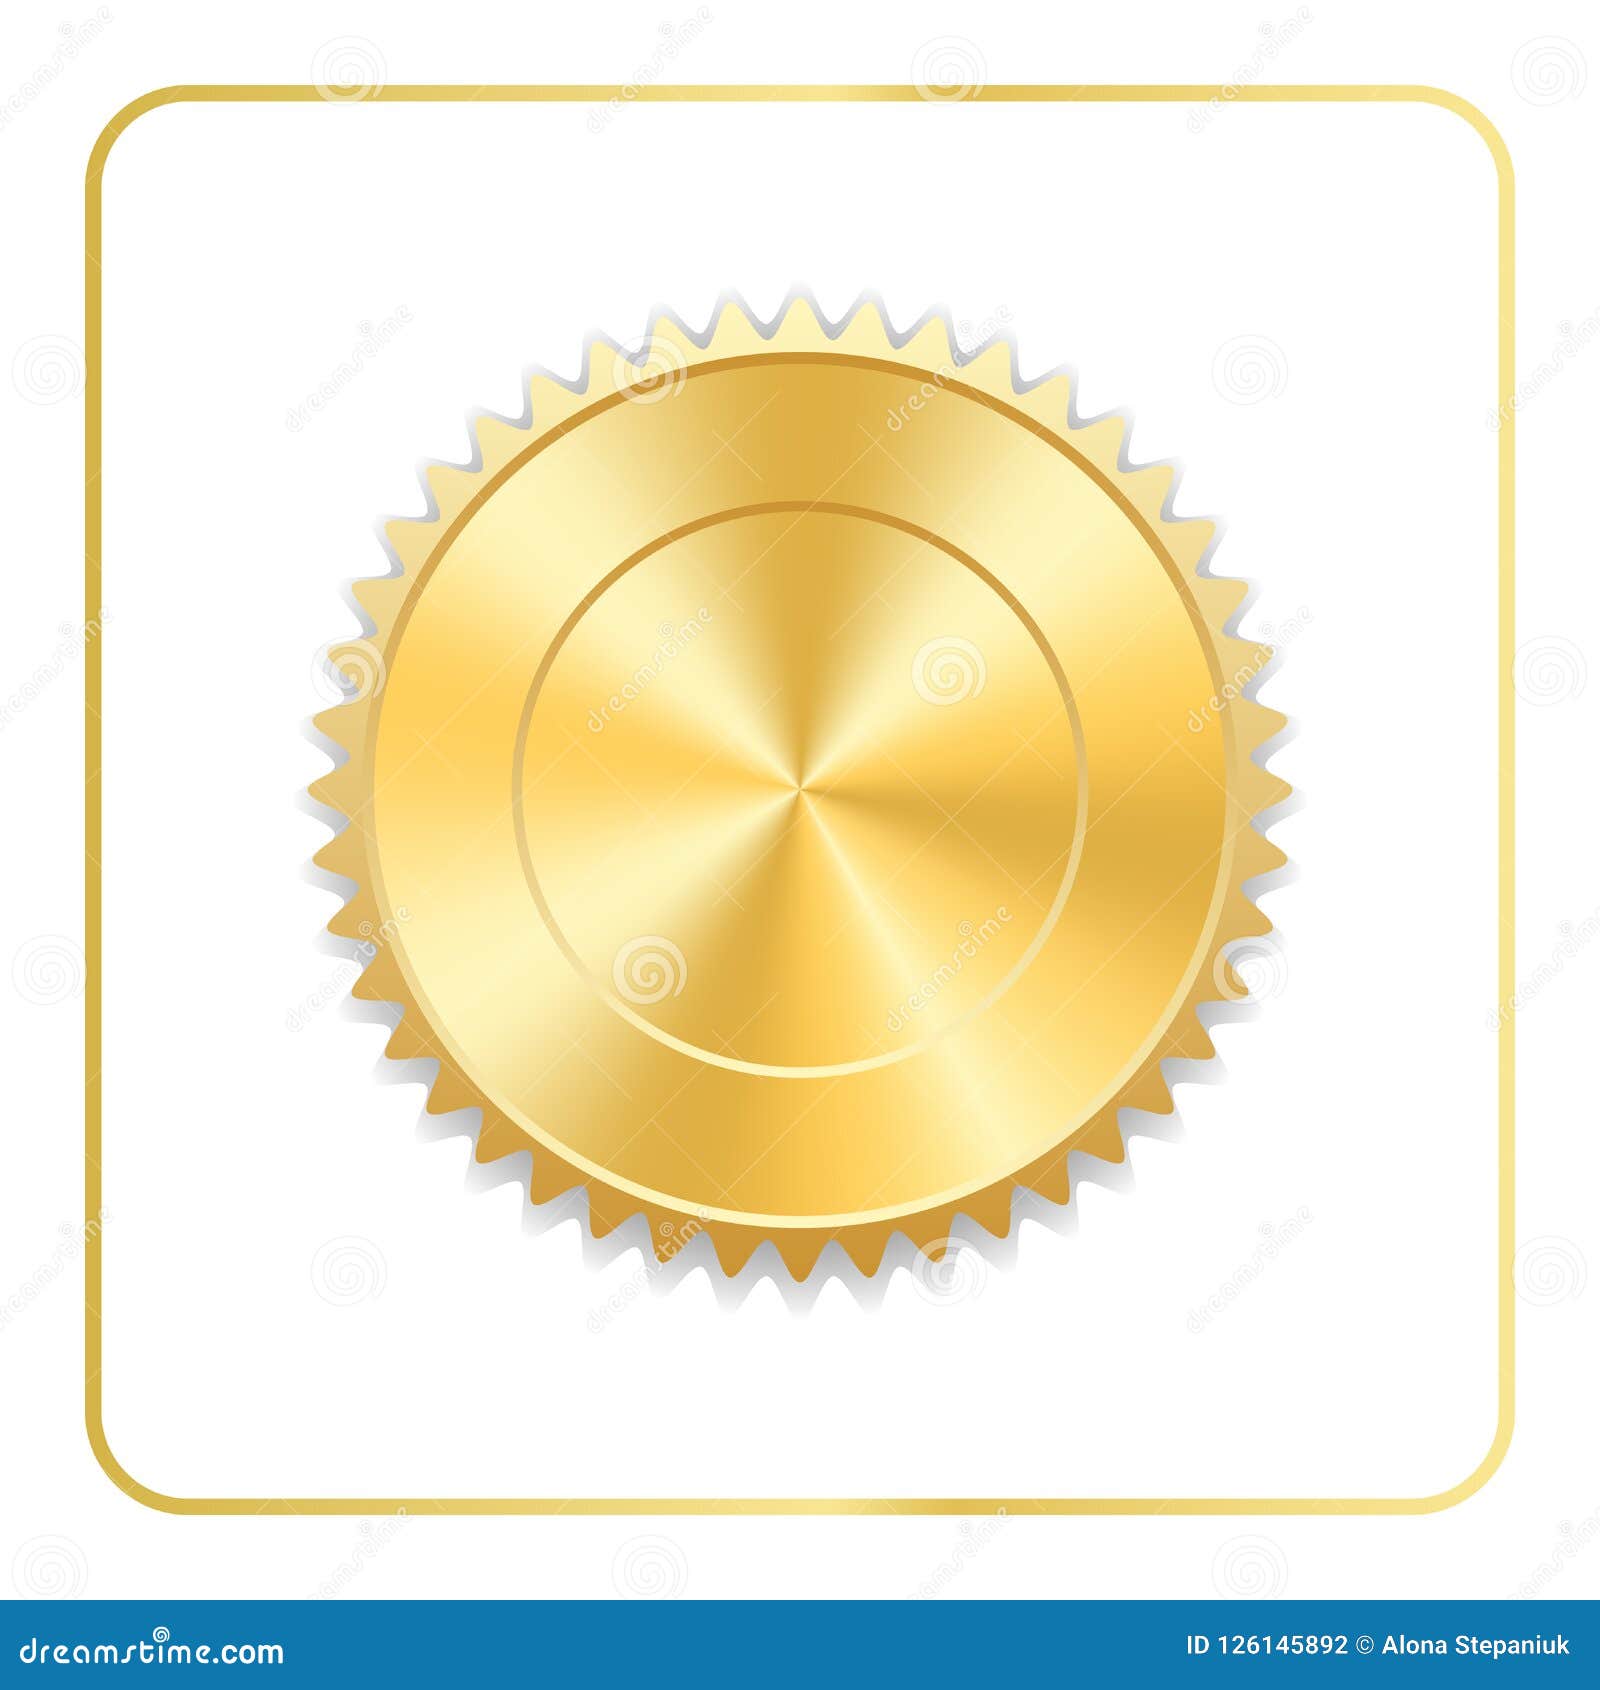 https://thumbs.dreamstime.com/z/seal-award-gold-icon-blank-medal-isolated-white-background-stamp-design-golden-emblem-symbol-assurance-winner-guarantee-126145892.jpg